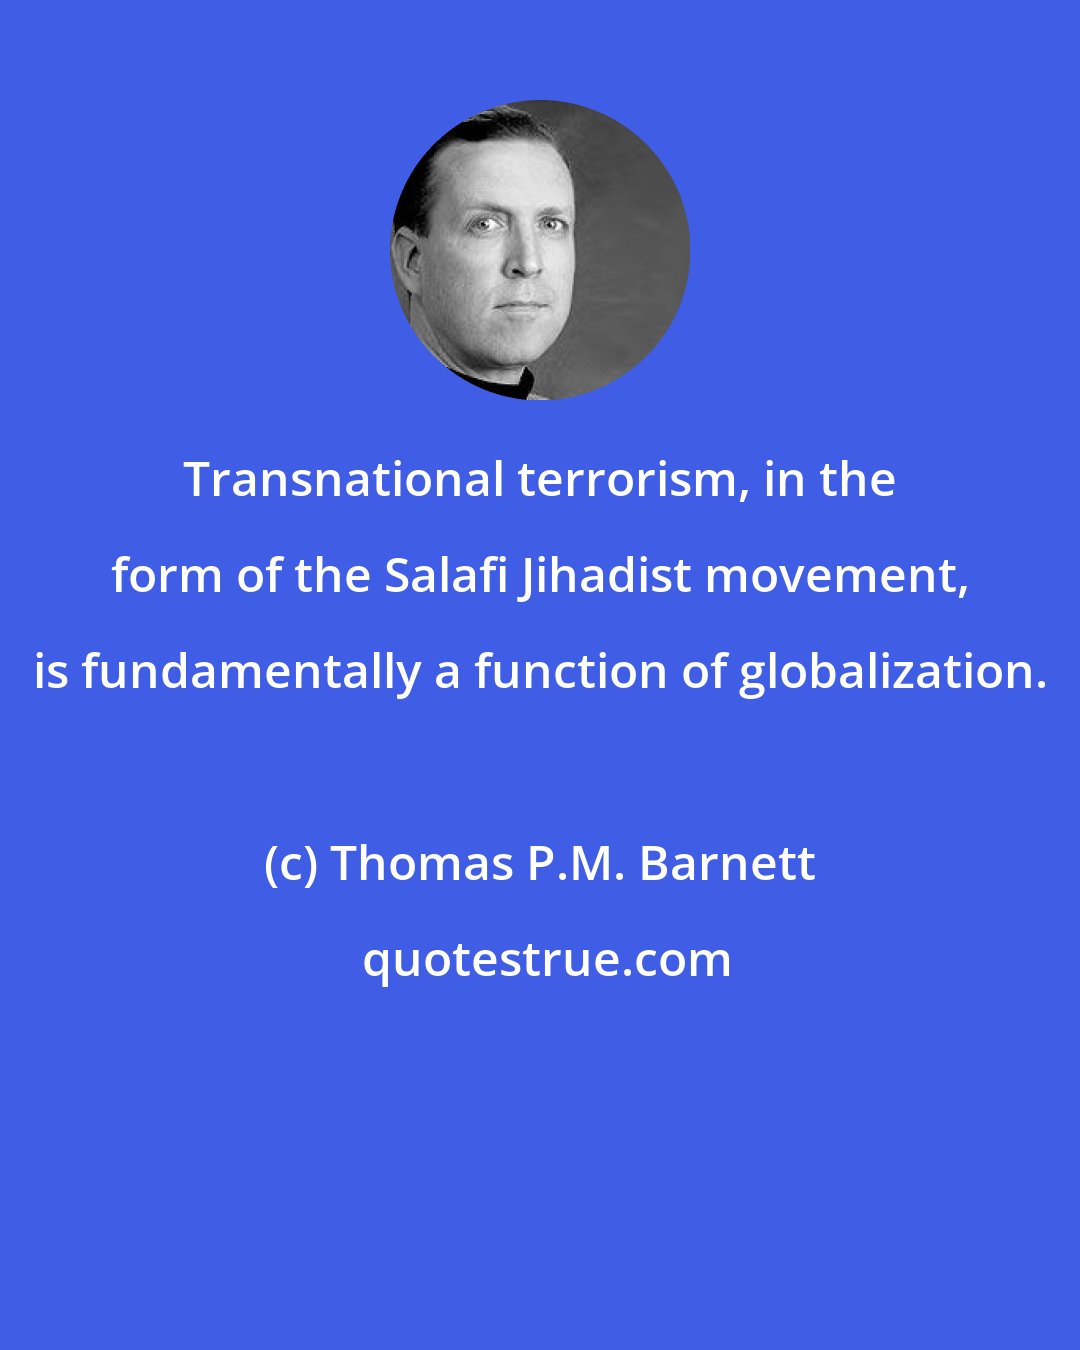 Thomas P.M. Barnett: Transnational terrorism, in the form of the Salafi Jihadist movement, is fundamentally a function of globalization.